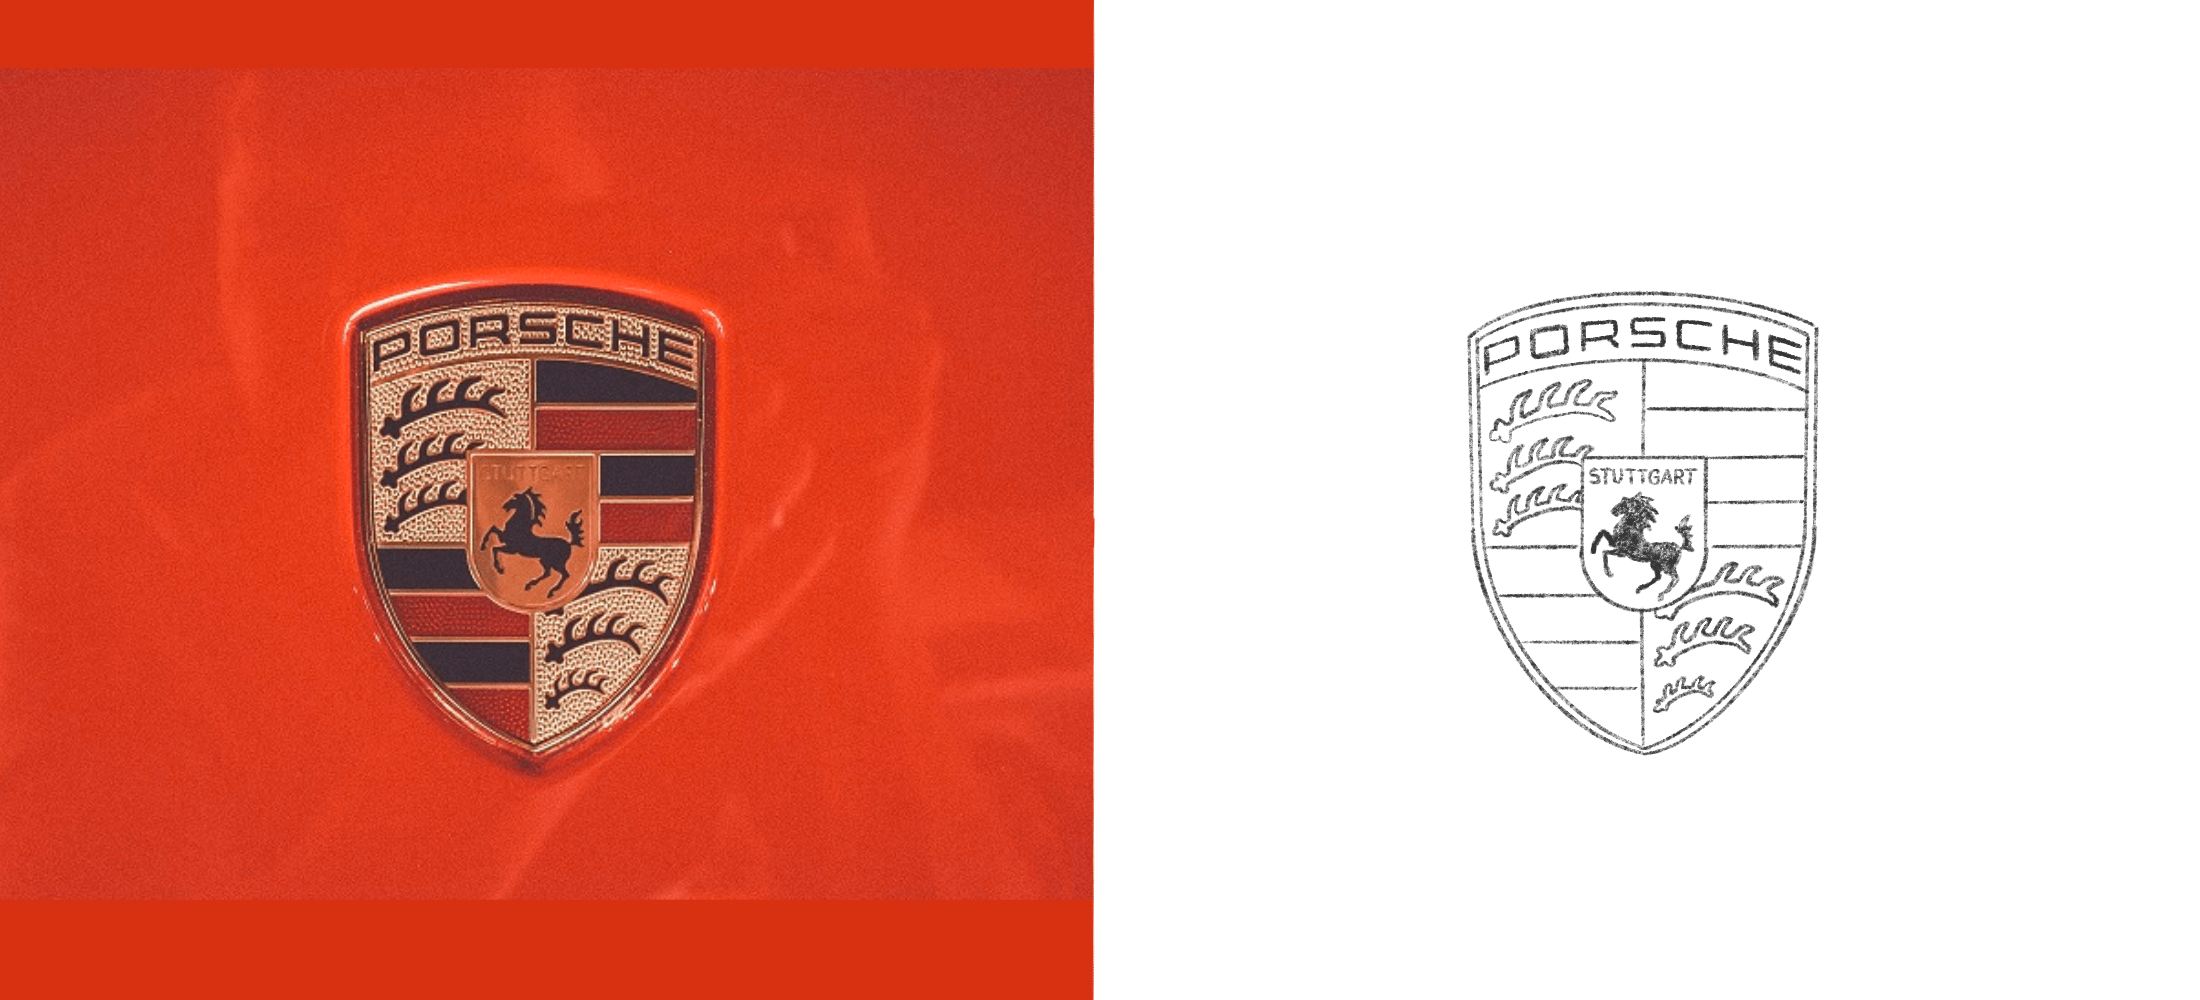 Porsche shield emblem logo attached to a orange Porsche car alongside a drawn version of the Porsche logo